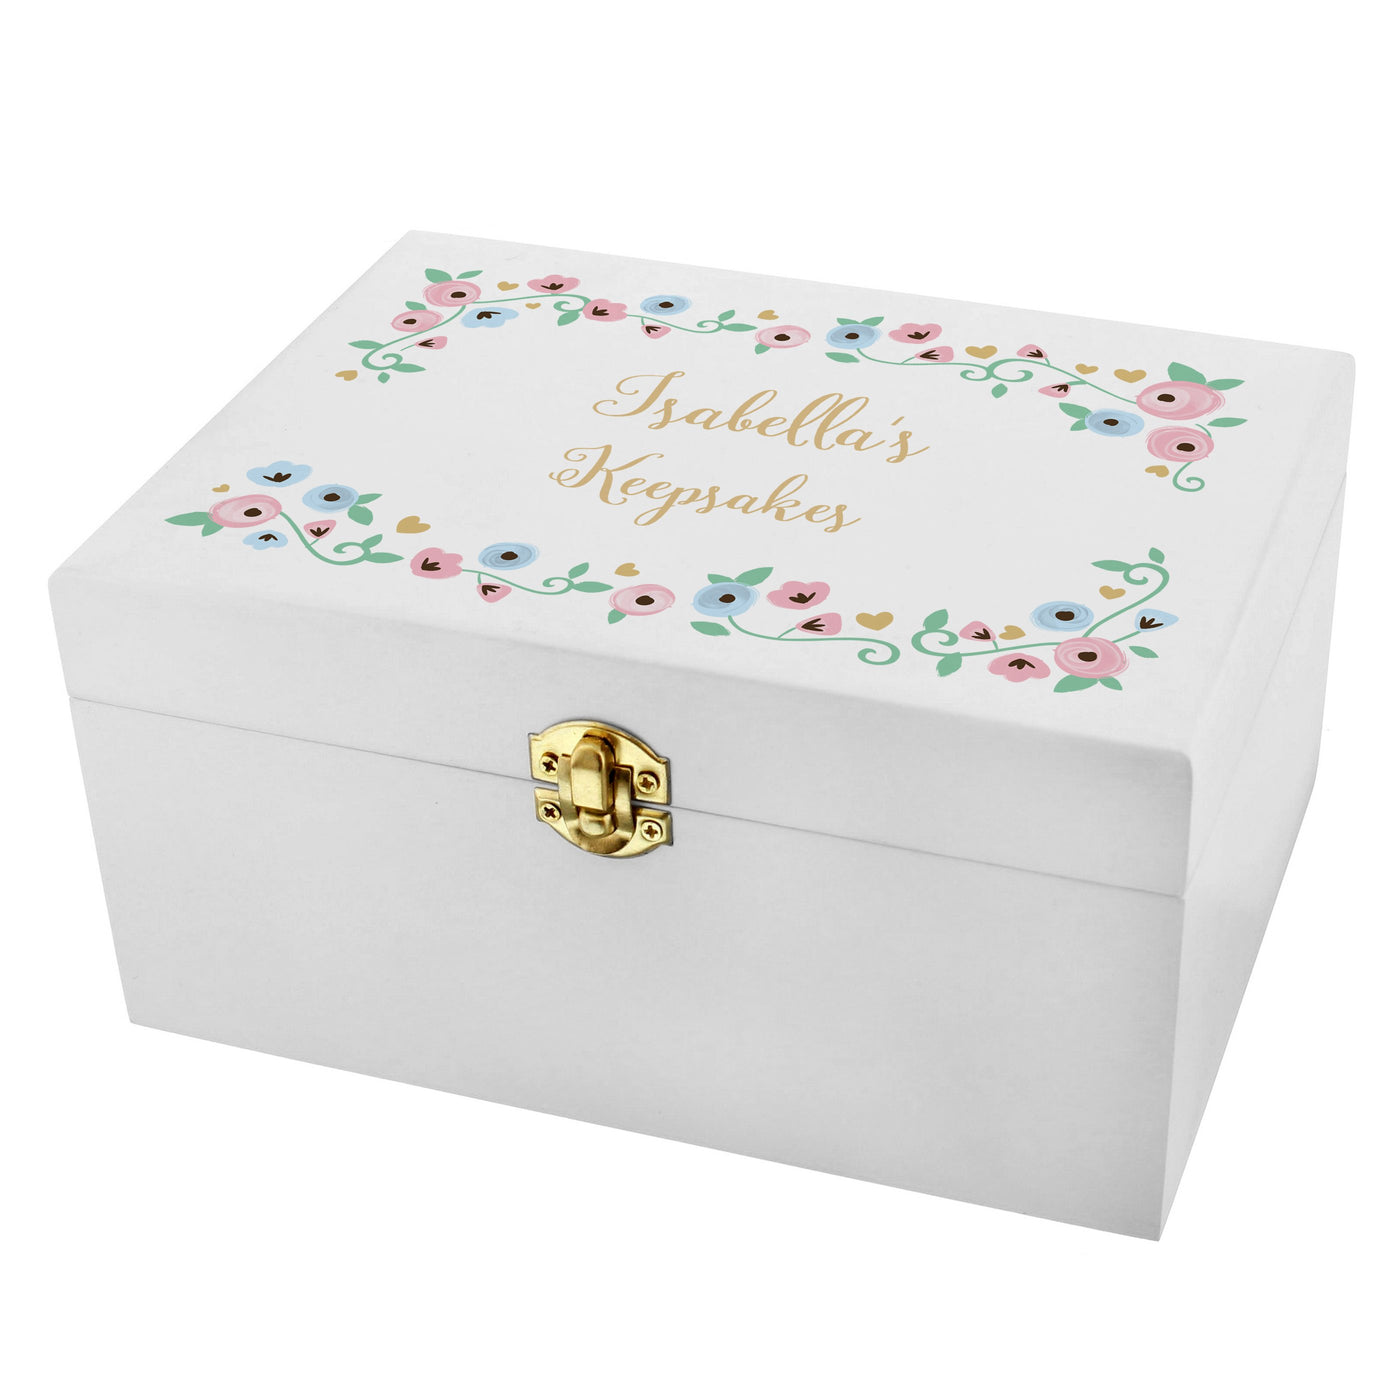 Personalised Fairytale Floral White Wooden Keepsake Box - Shop Personalised Gifts